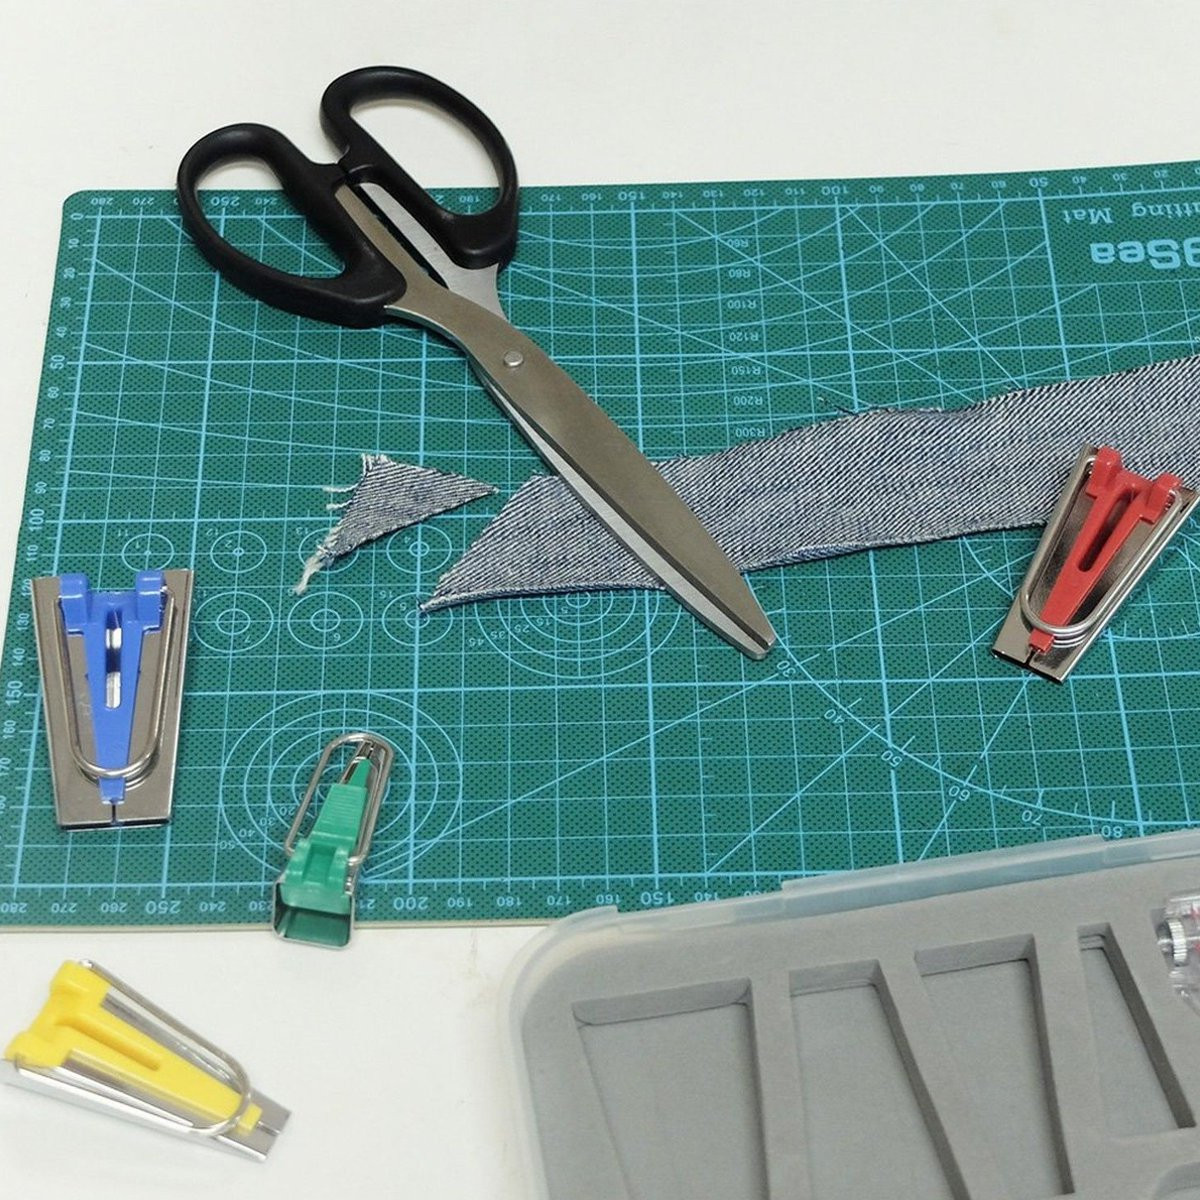 6121825mm-Fabric-Bias-Binding-Tape-Maker-Kit-Set-Binder-Foot-For-Sewing-Quilting--AWL-1114495-10